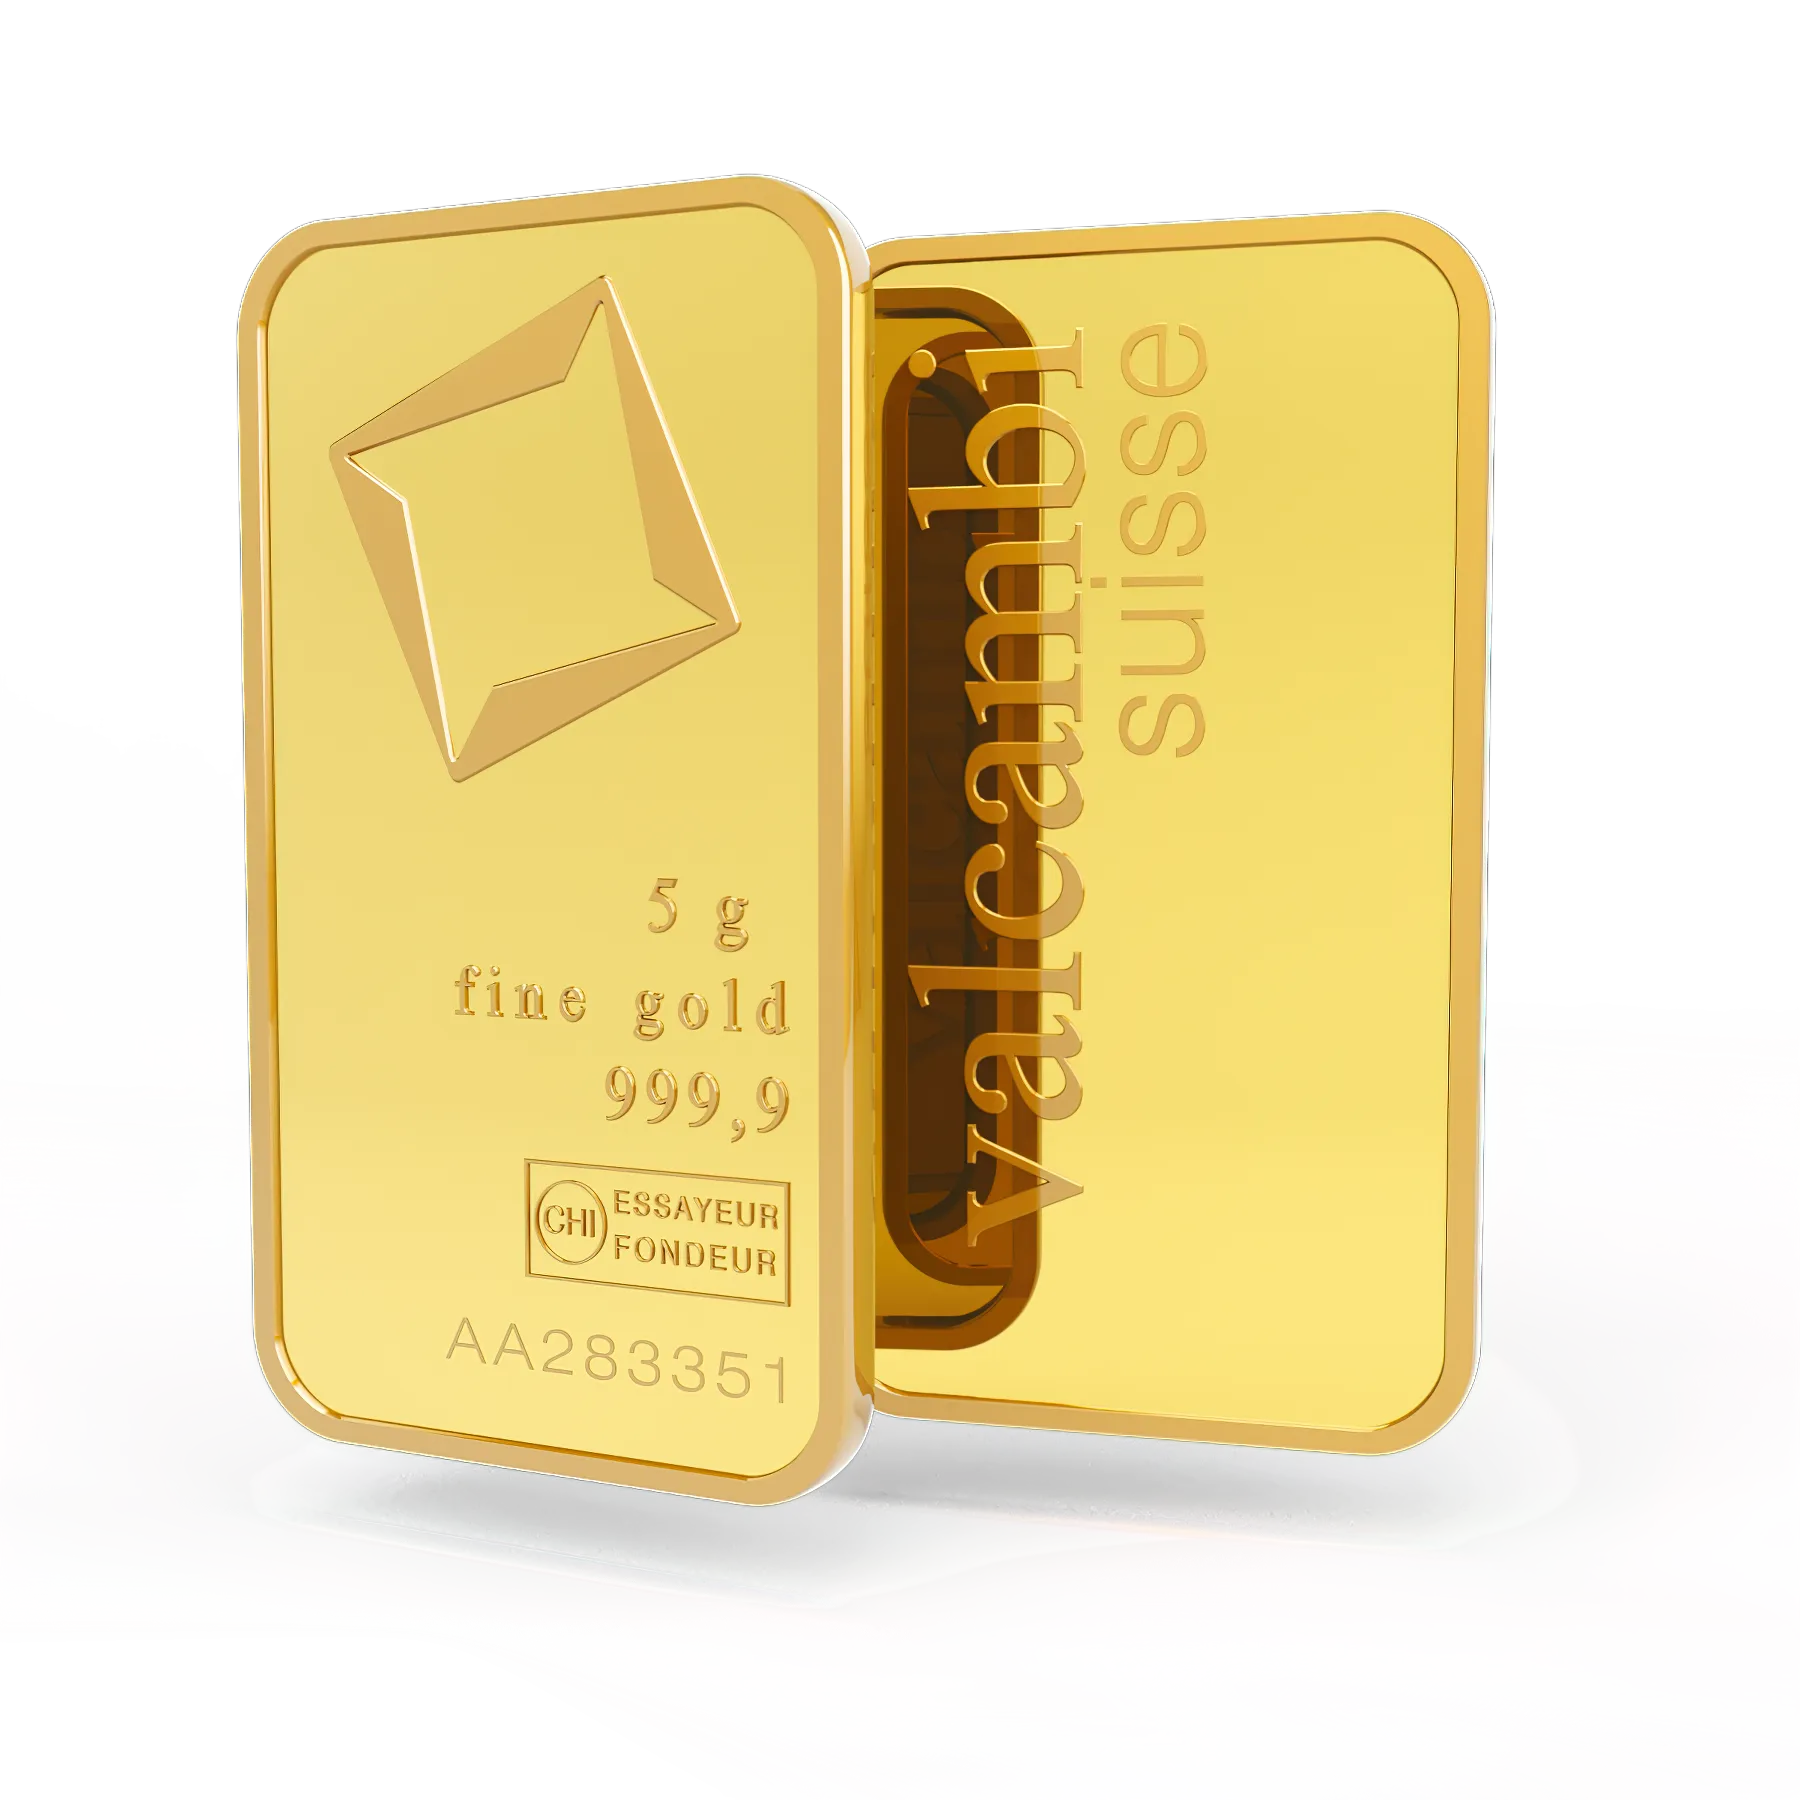 Aranyrúd 5 gr, Svájc, Fine Gold 999,9